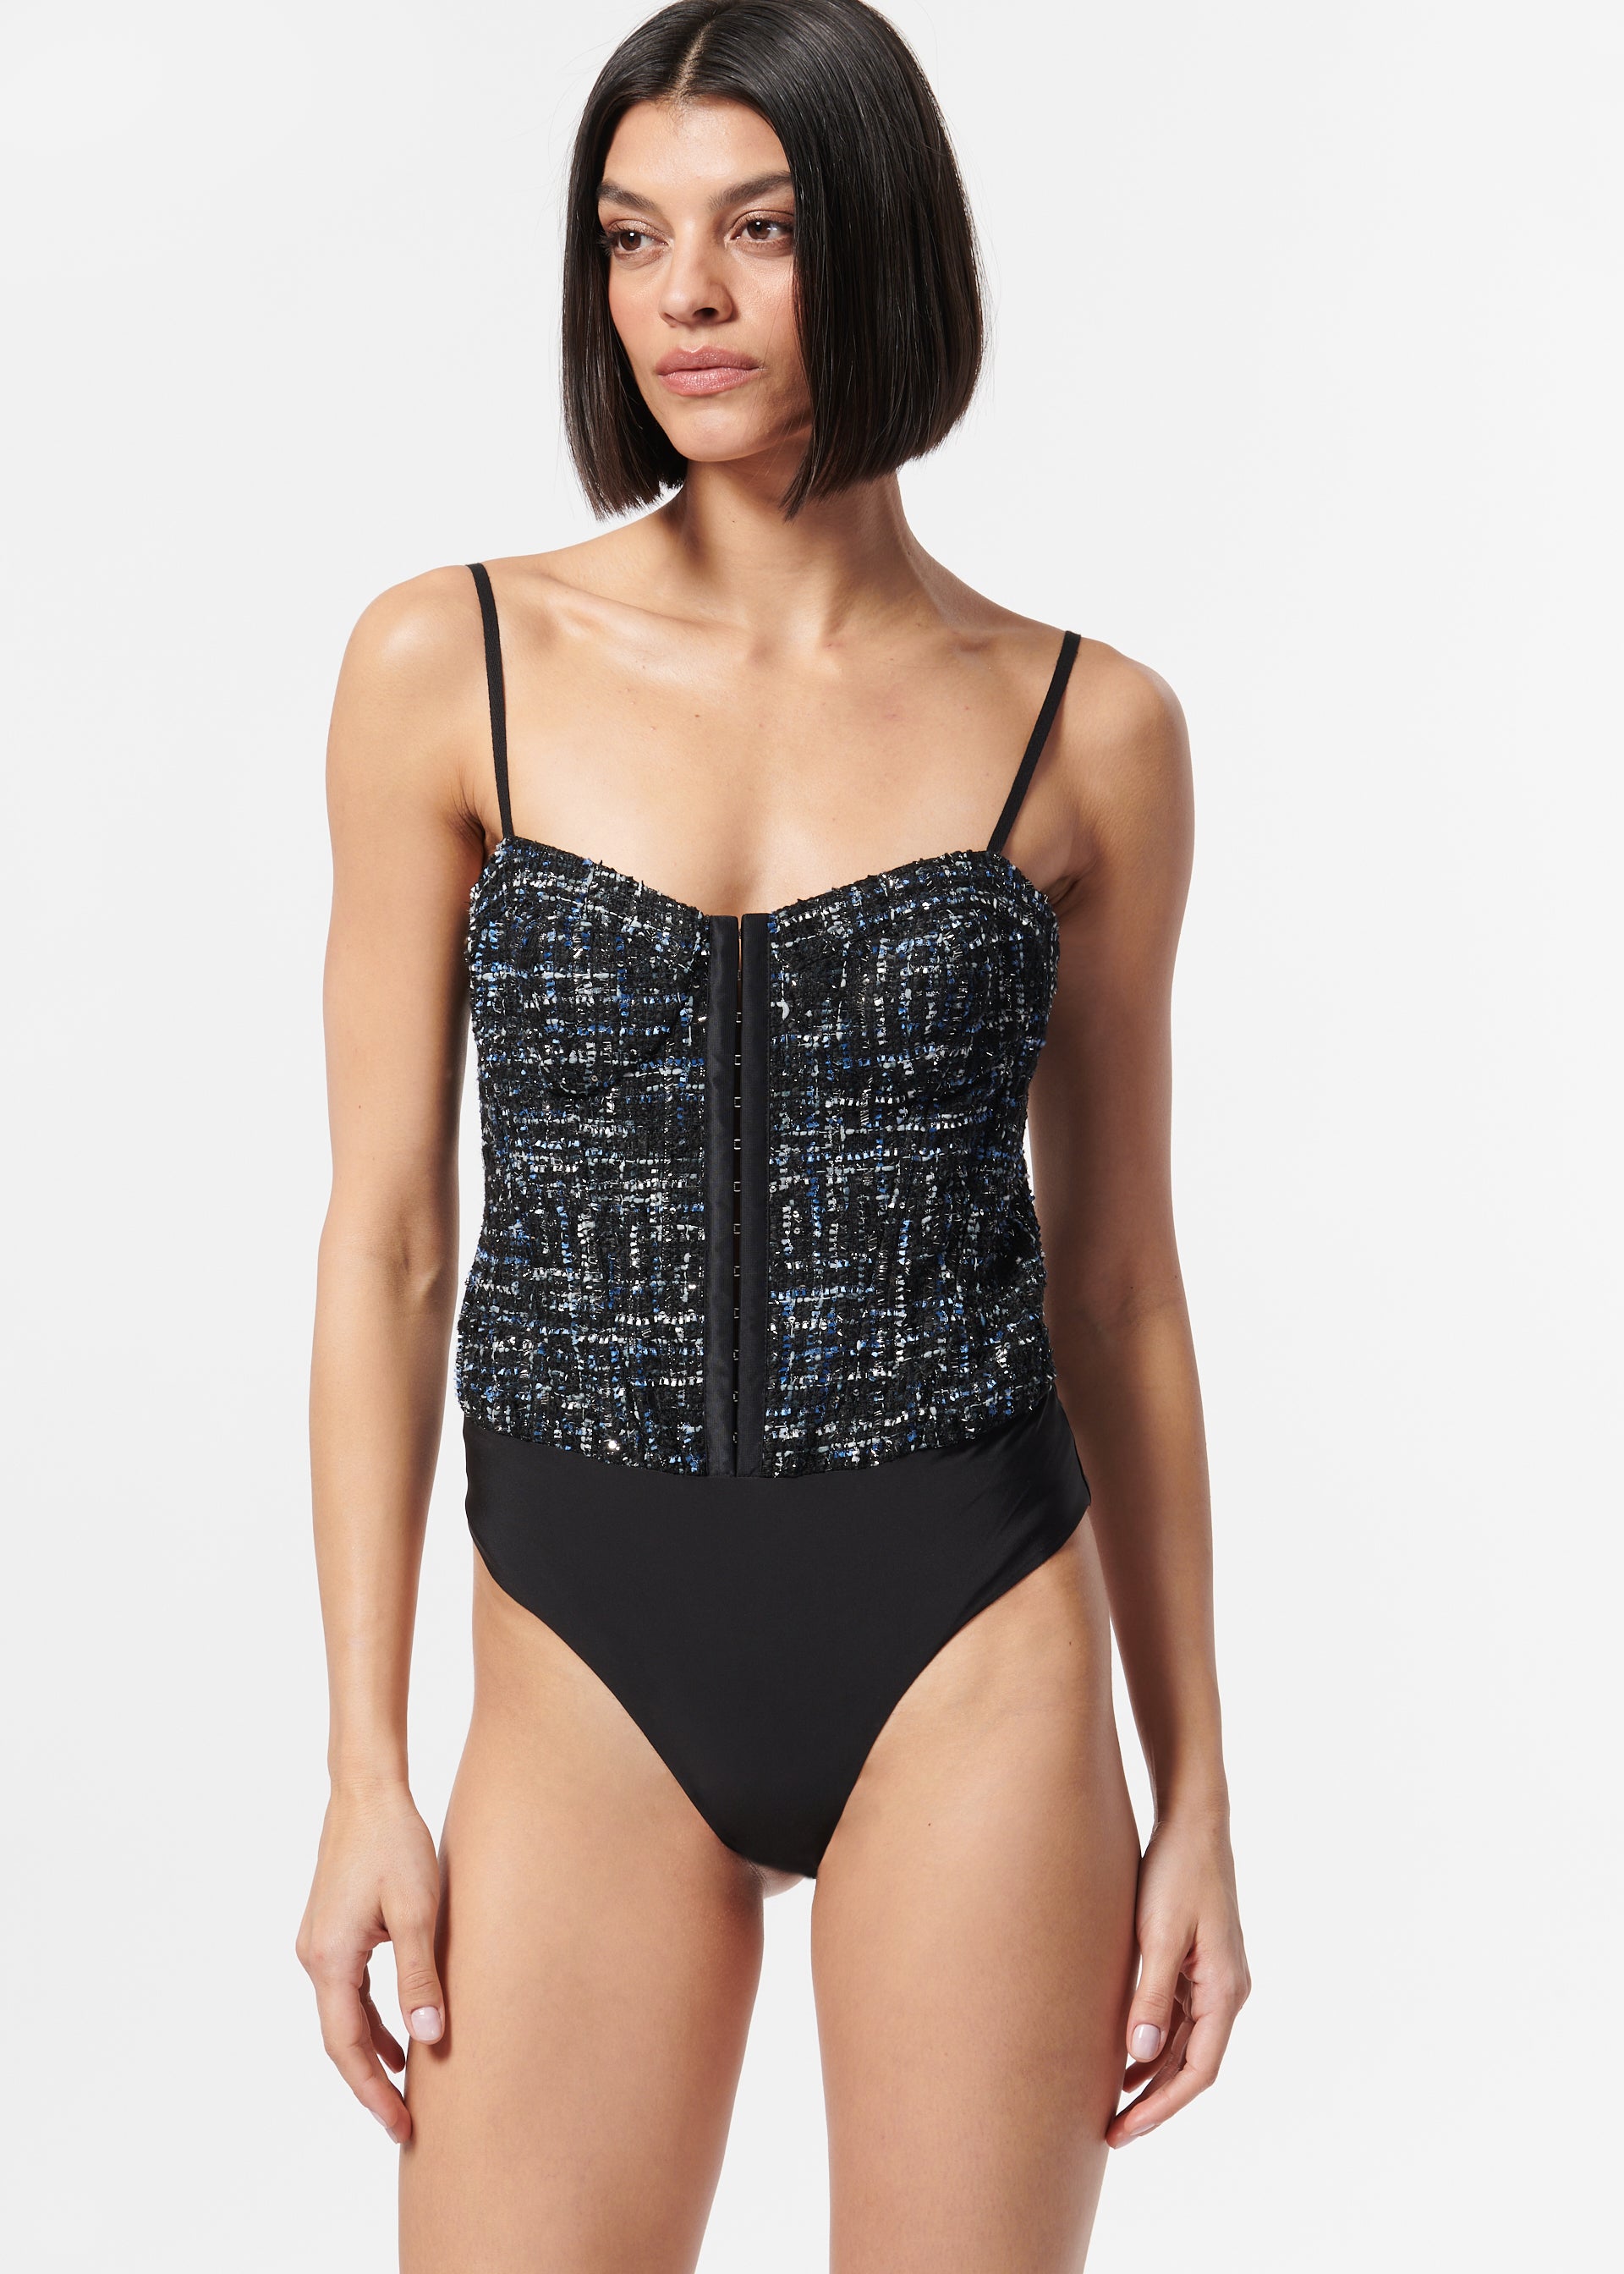 $298 Cami NYC Women's Black Reina Strapless Lace Bodysuit Size X-Small 